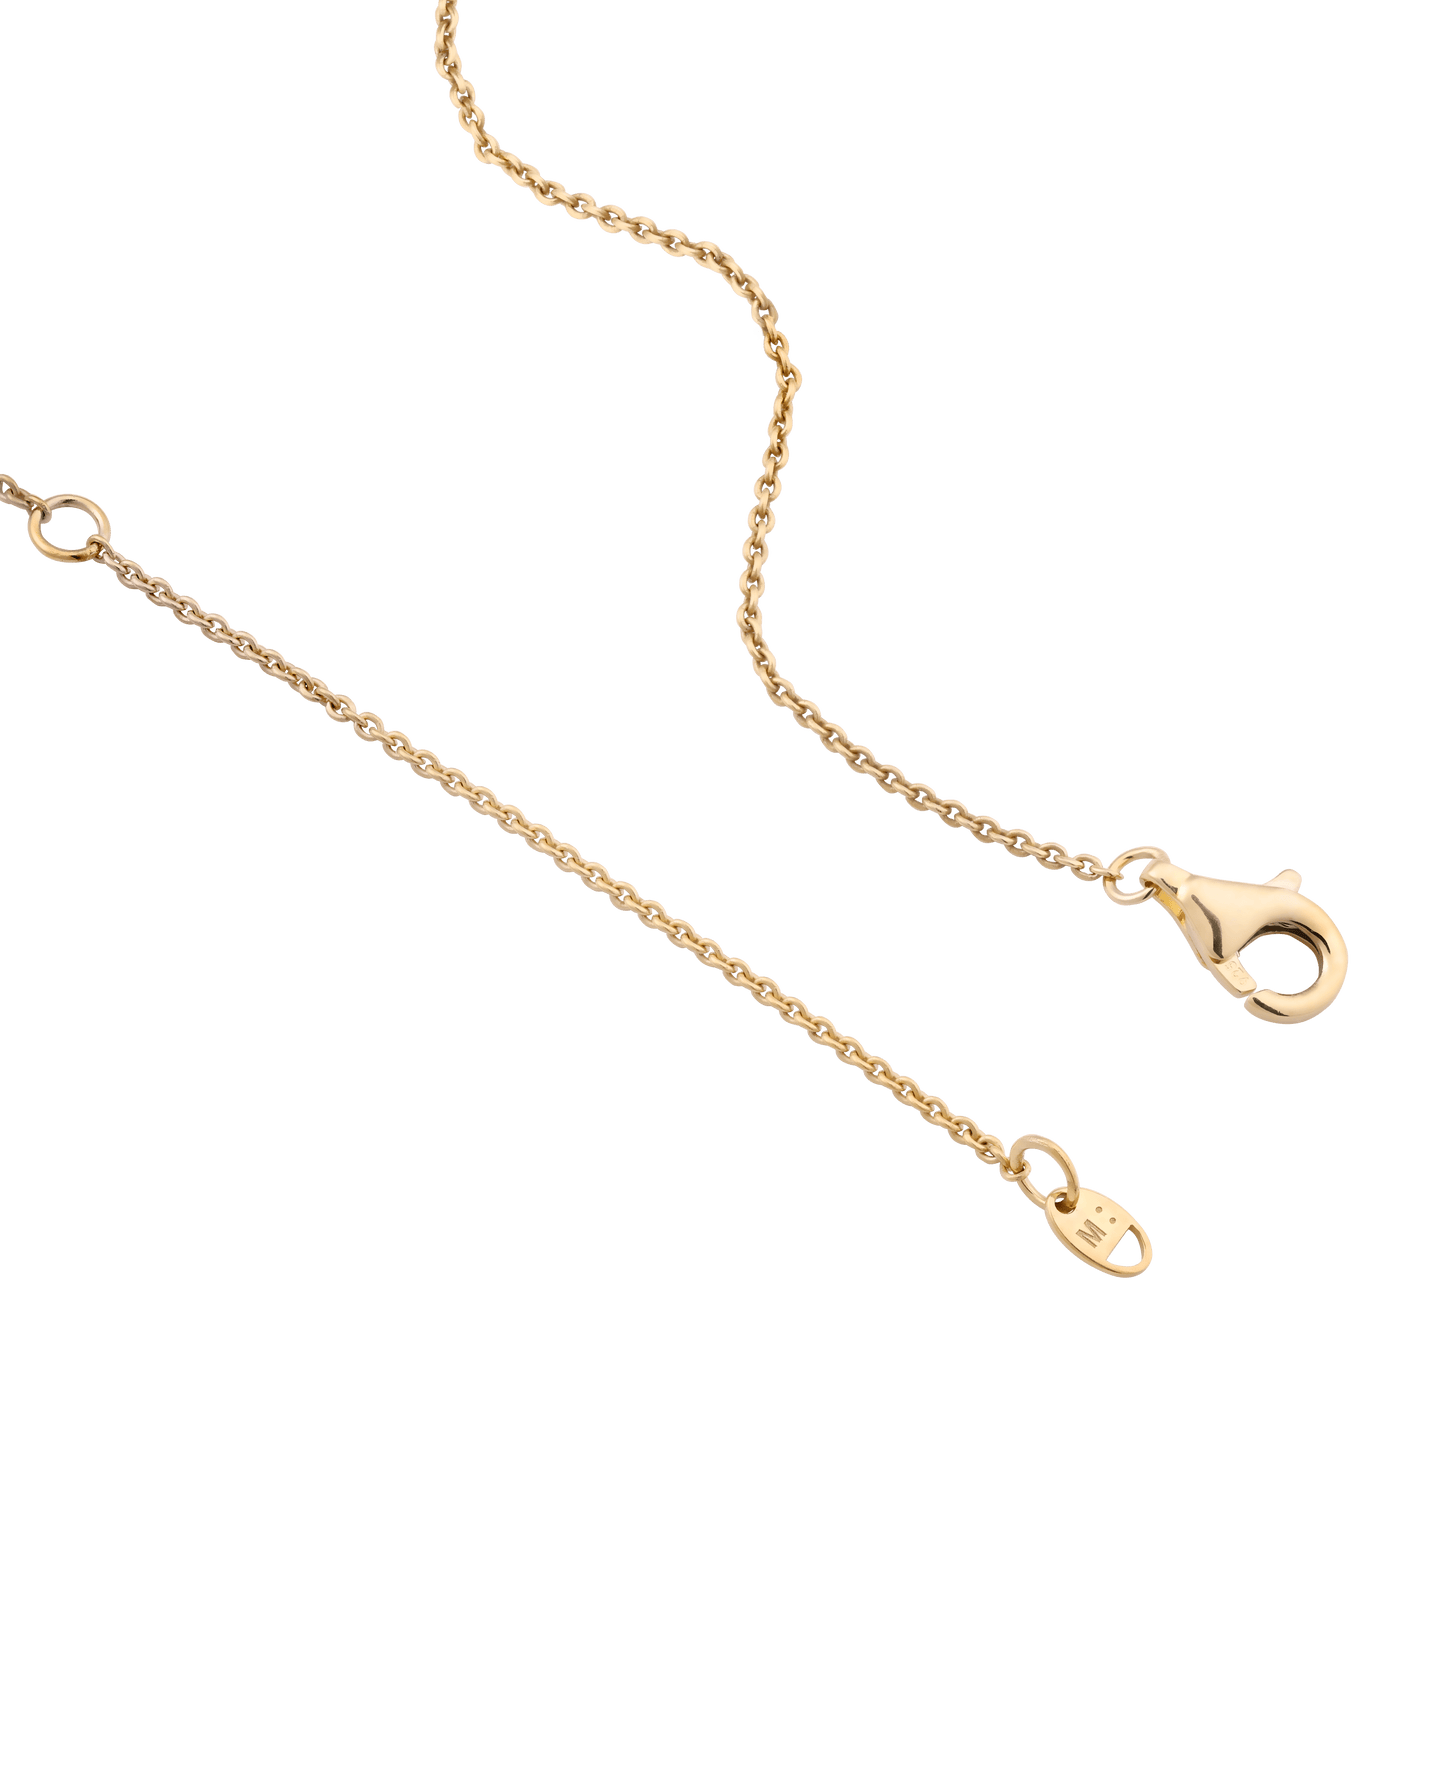 Oval Solitaire Diamond Bracelet - 925 Sterling Silver Bracelets magal-dev 